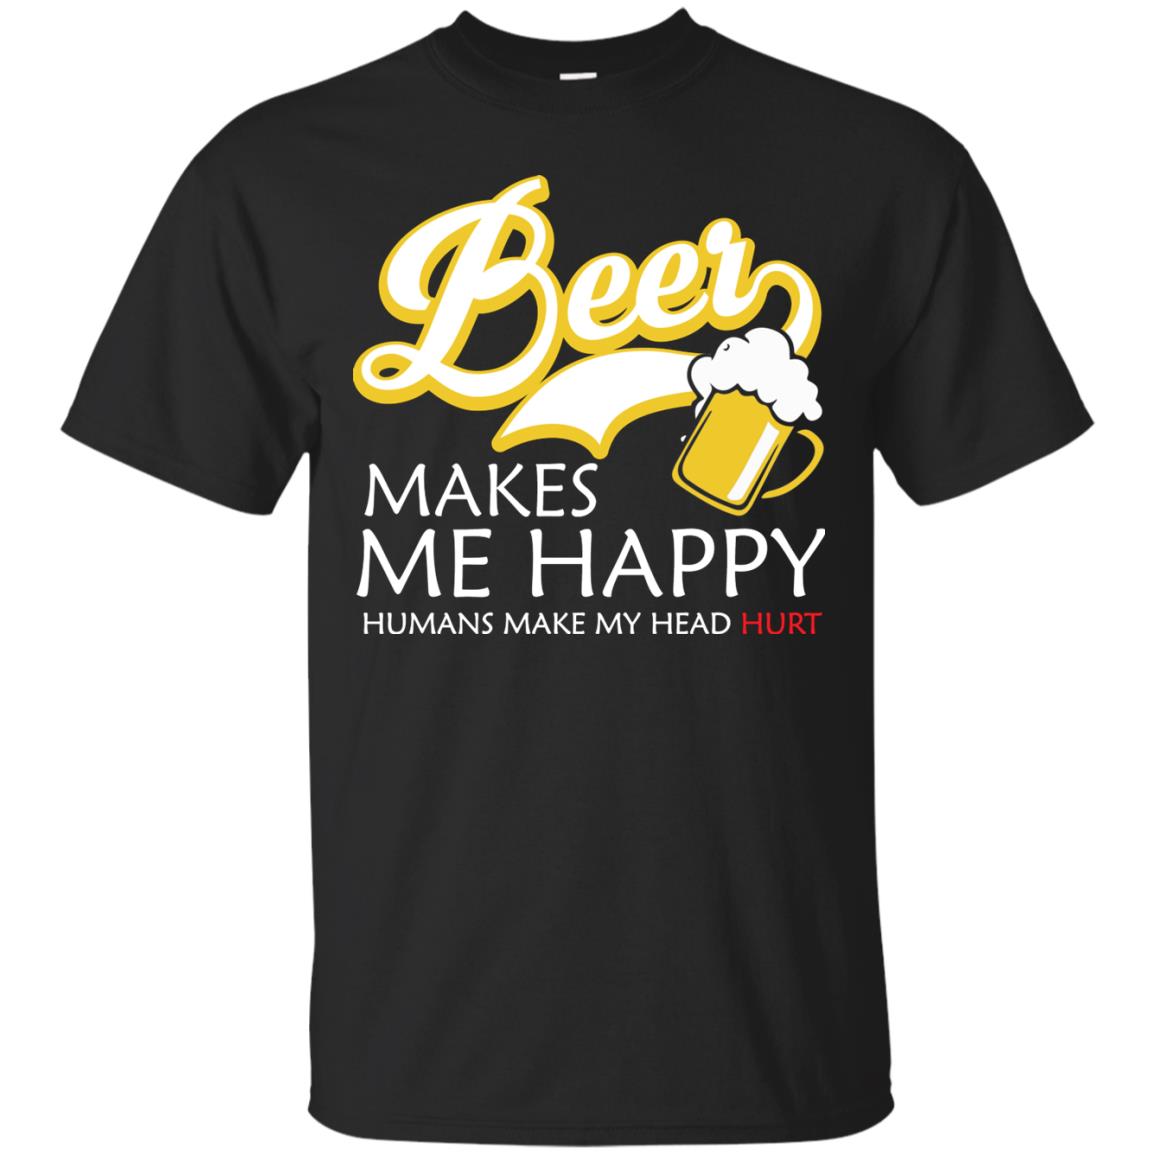 Beer Makes Me Happy Beer Lover T-shirt